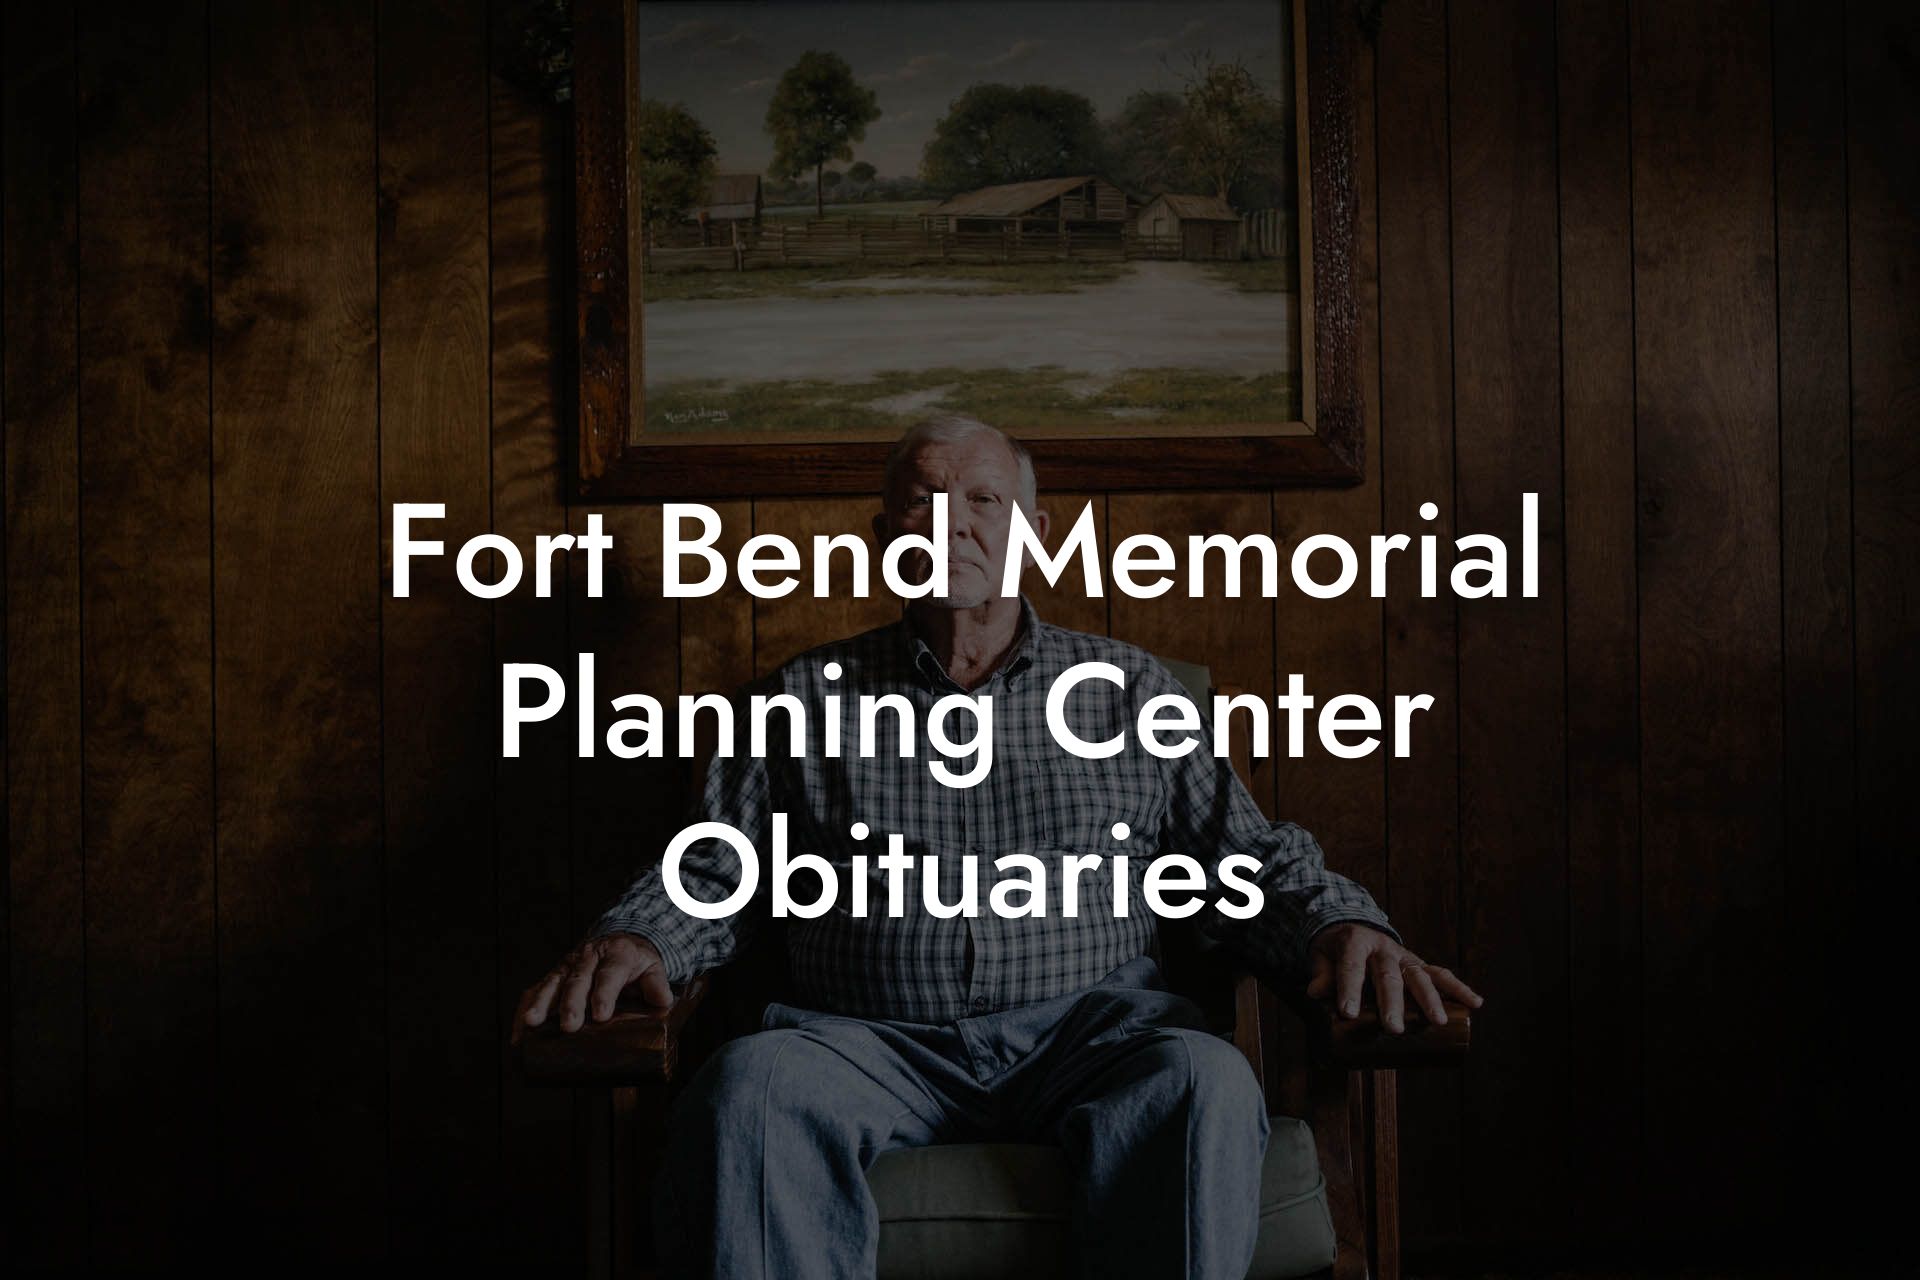 Fort Bend Memorial Planning Center Obituaries